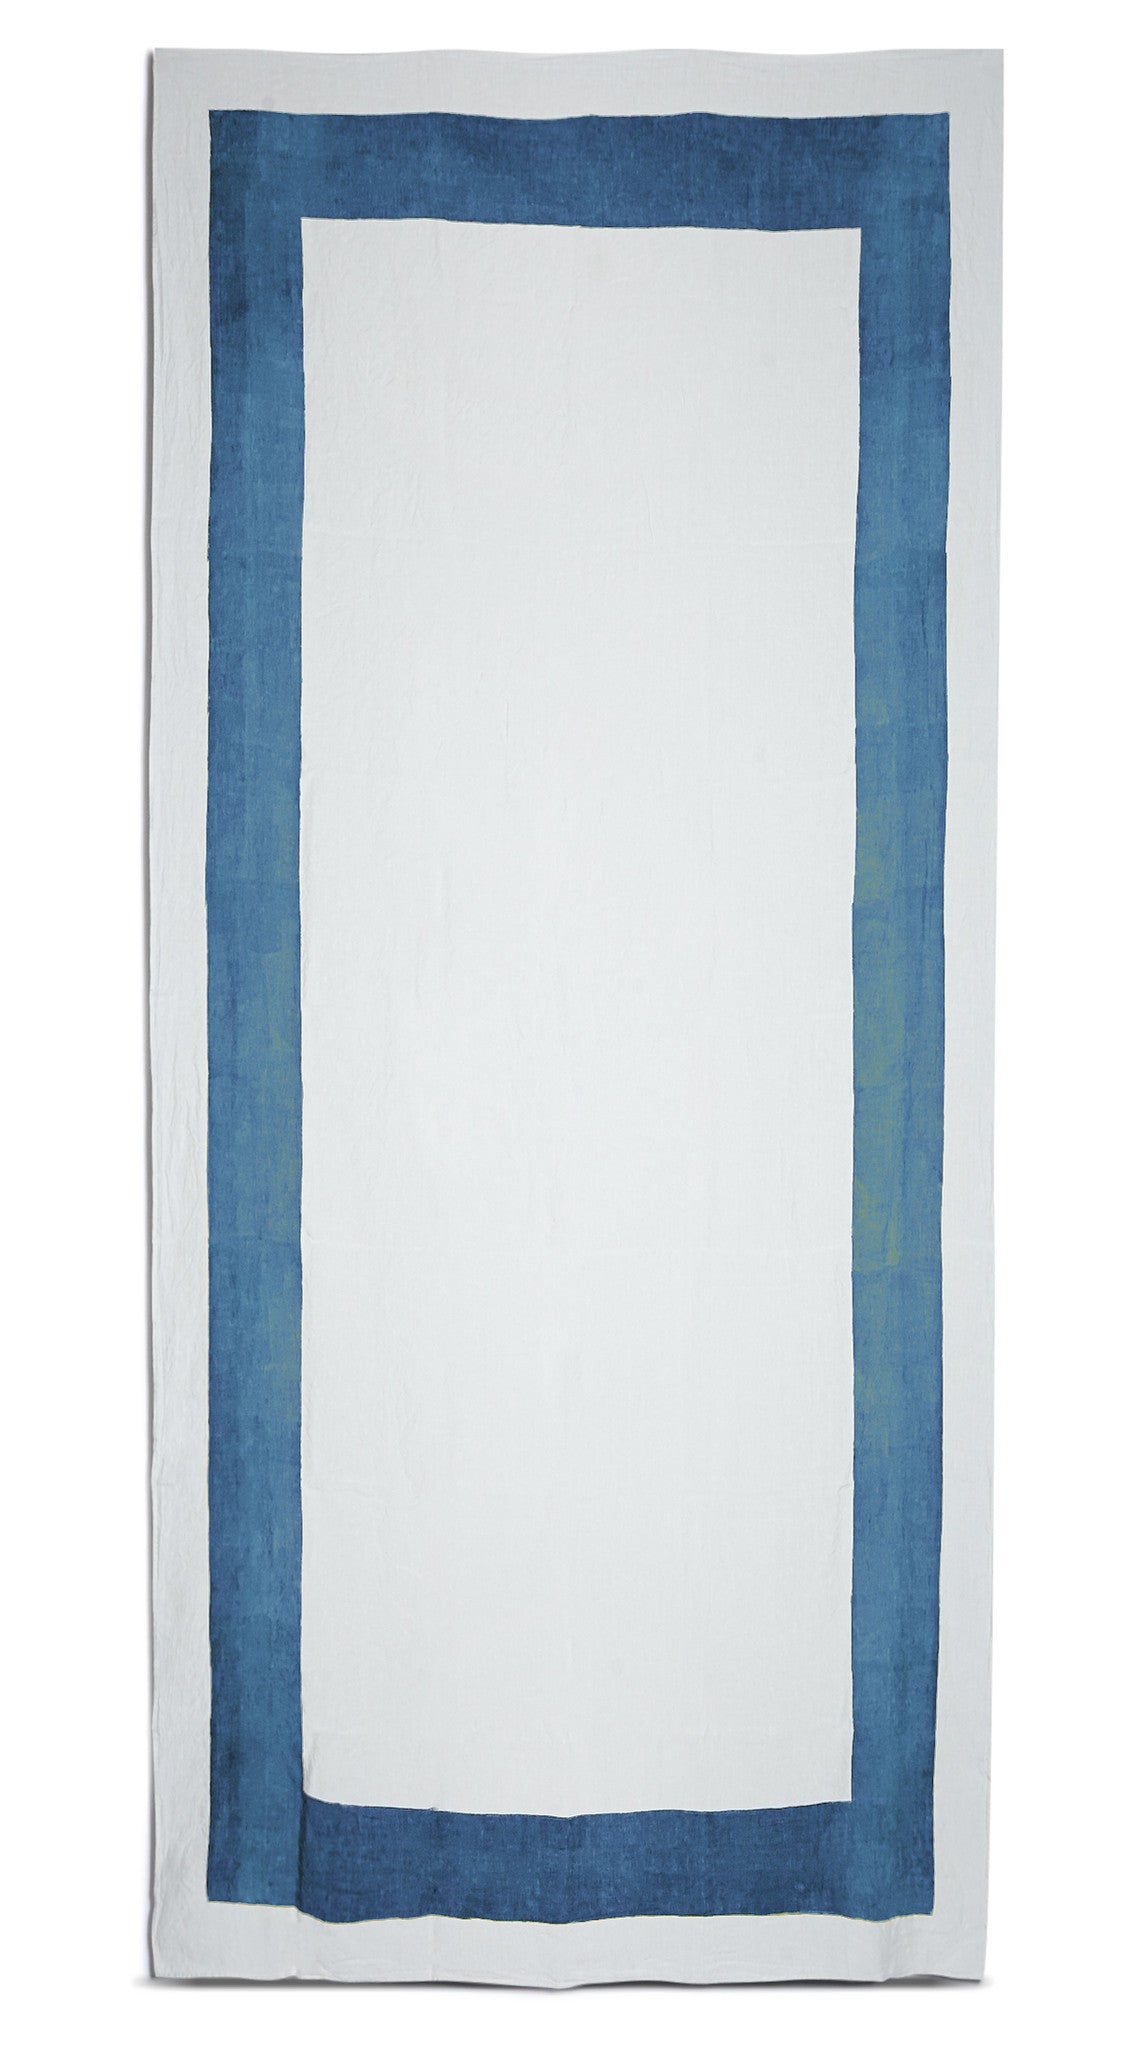 Cornice Linen Tablecloth in Sky Blue